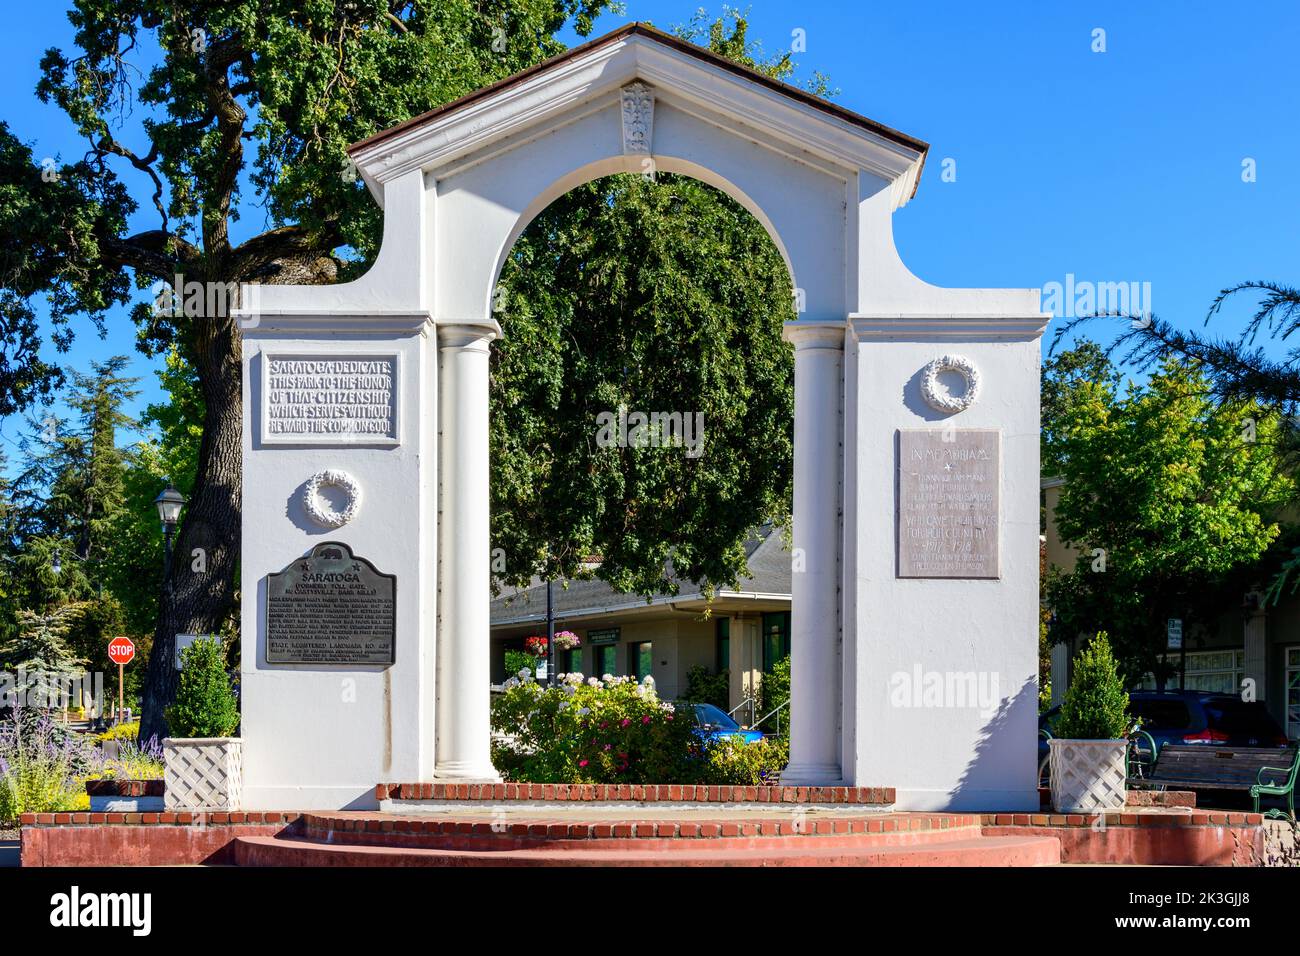 Saratoga arch with a California historical landmark plaque. - Saratoga , California, USA - 2022 Stock Photo